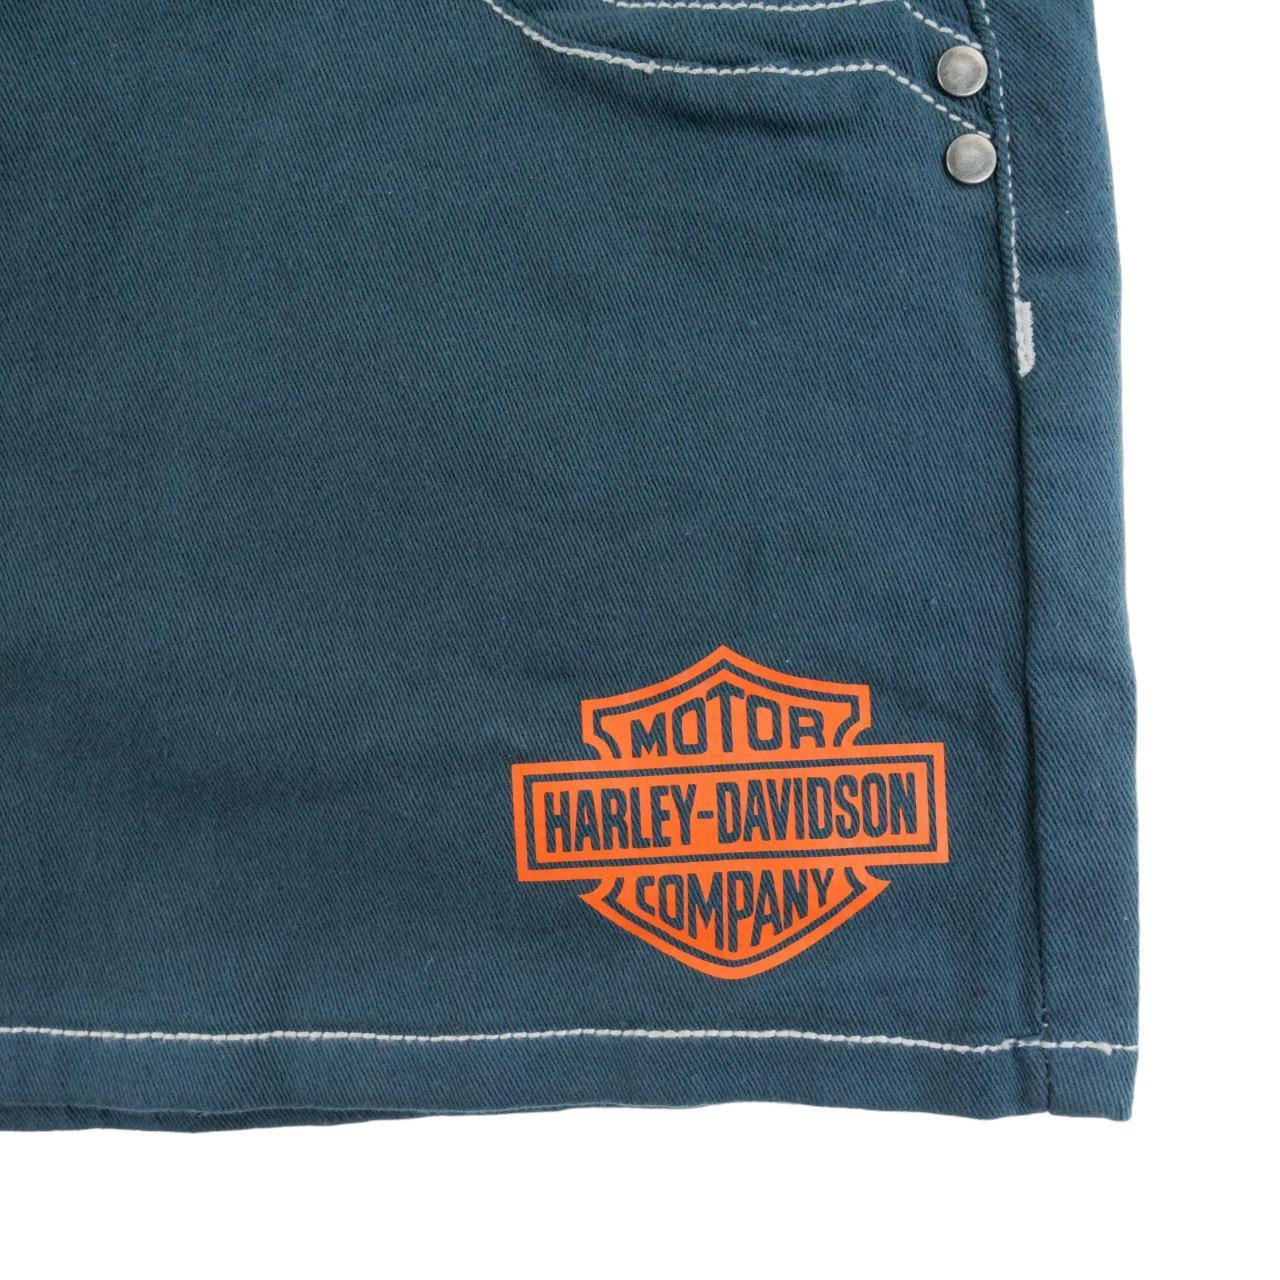 Vintage Harley Davidson Mini Skirt Size W33 - Known Source